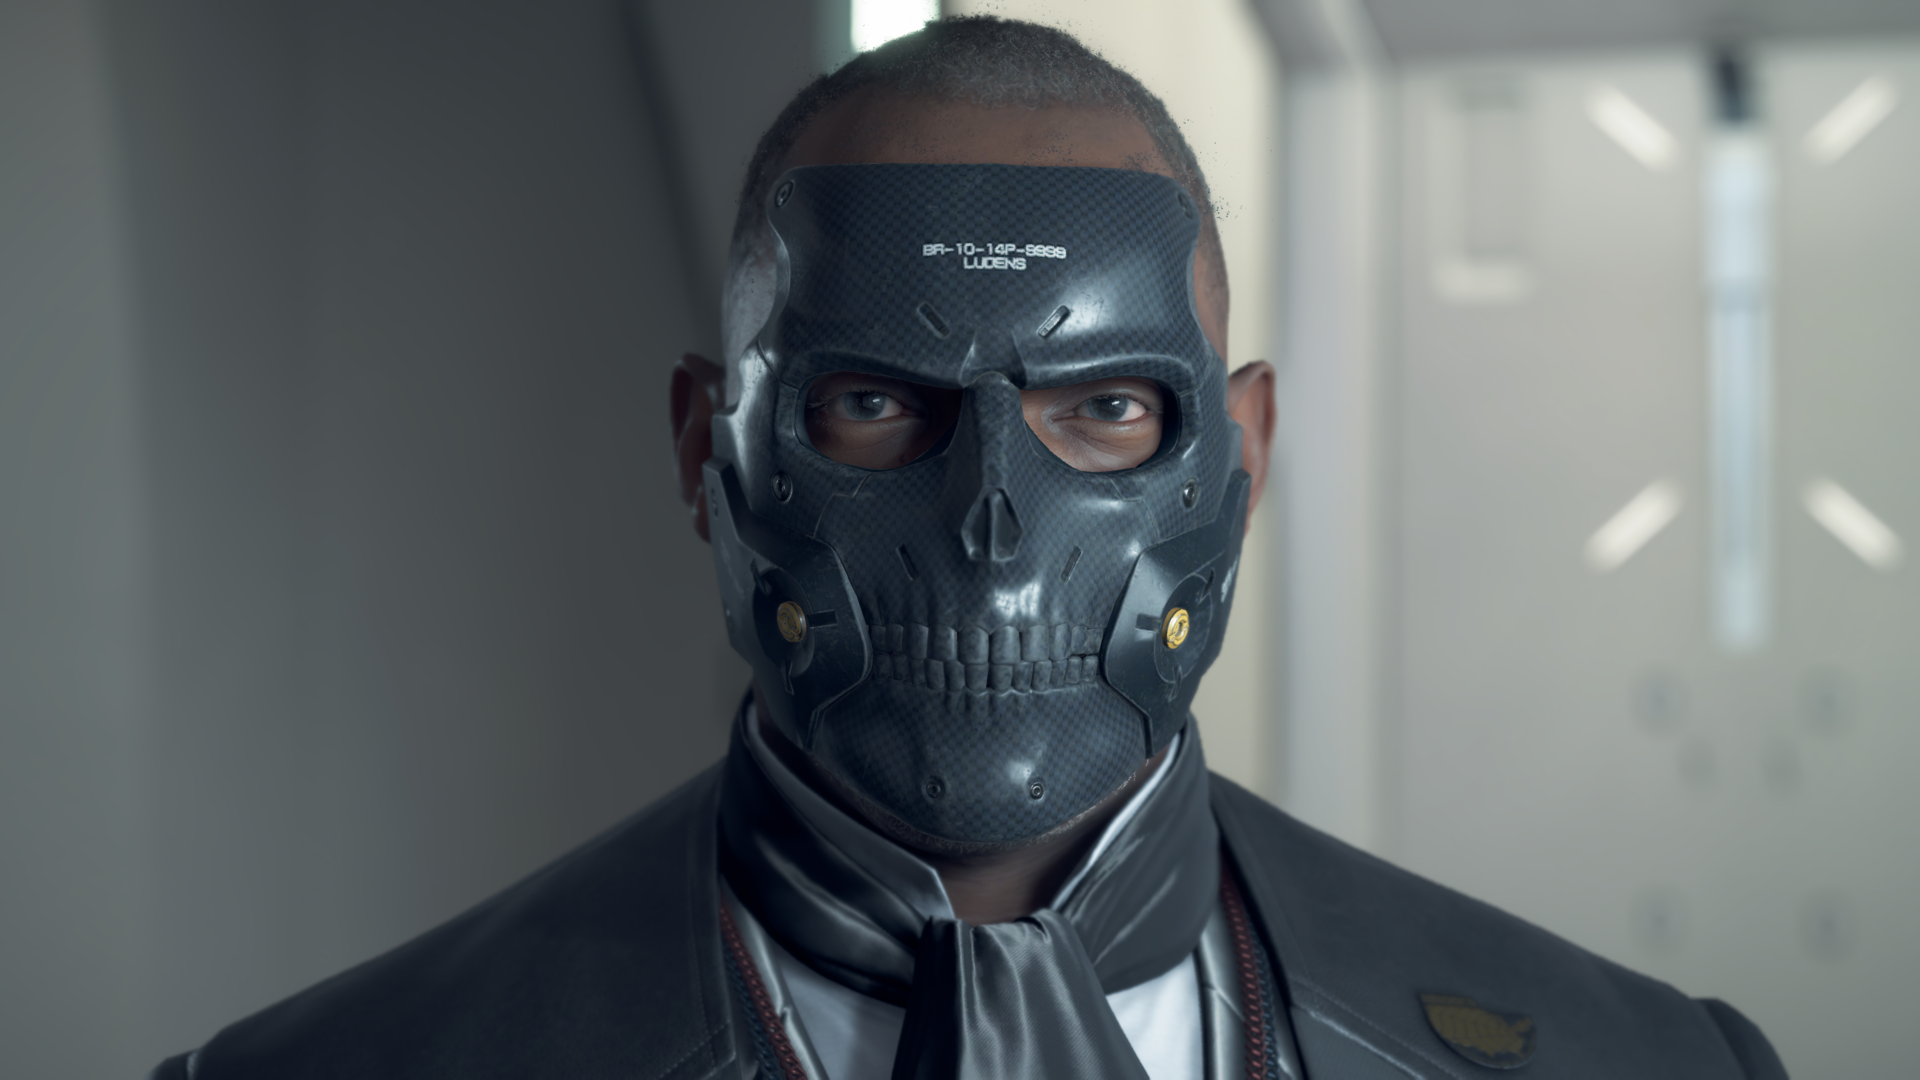 General 1920x1080 Kojima Productions Death Stranding video games Die-Hardman mask skull mask looking at viewer Ludens CGI video game characters